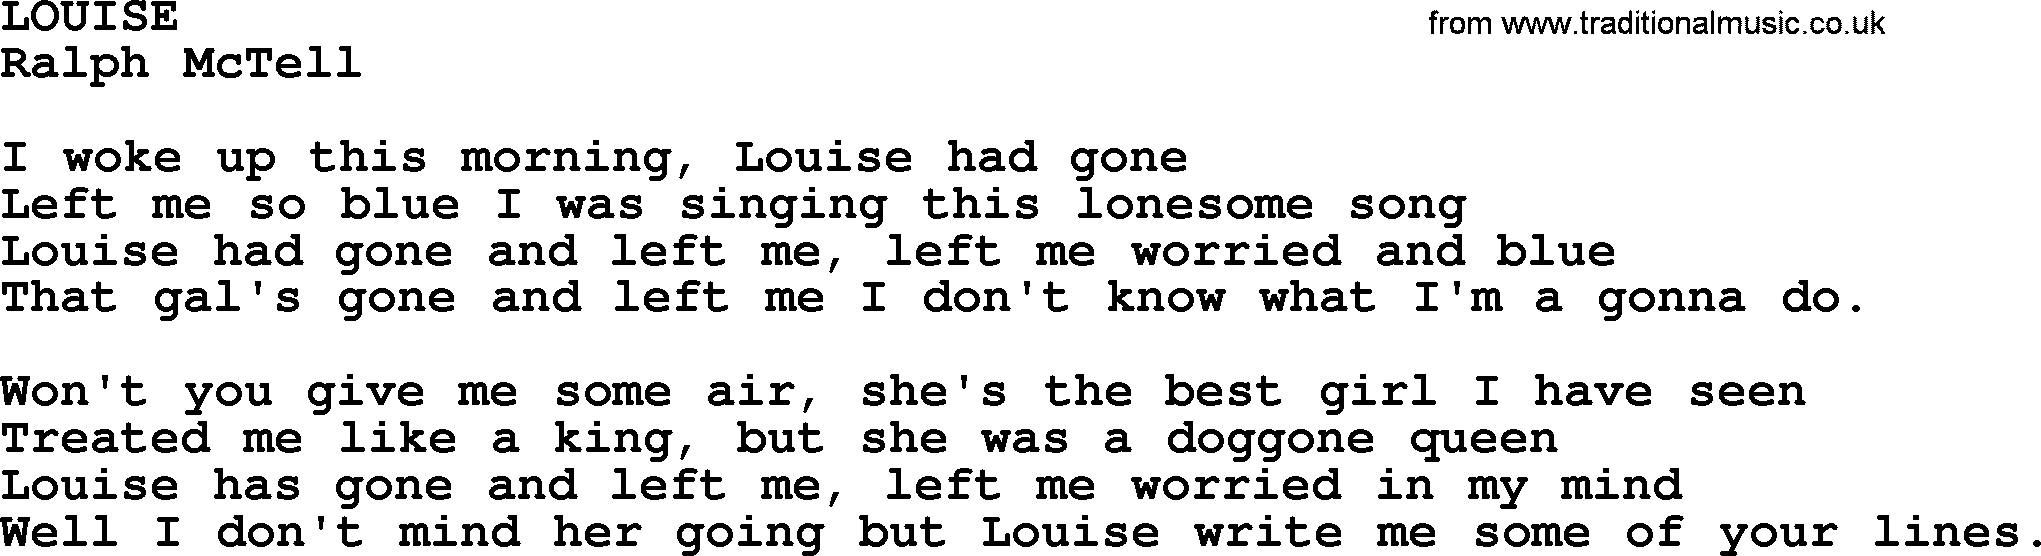 Ralph McTell Song: Louise, lyrics